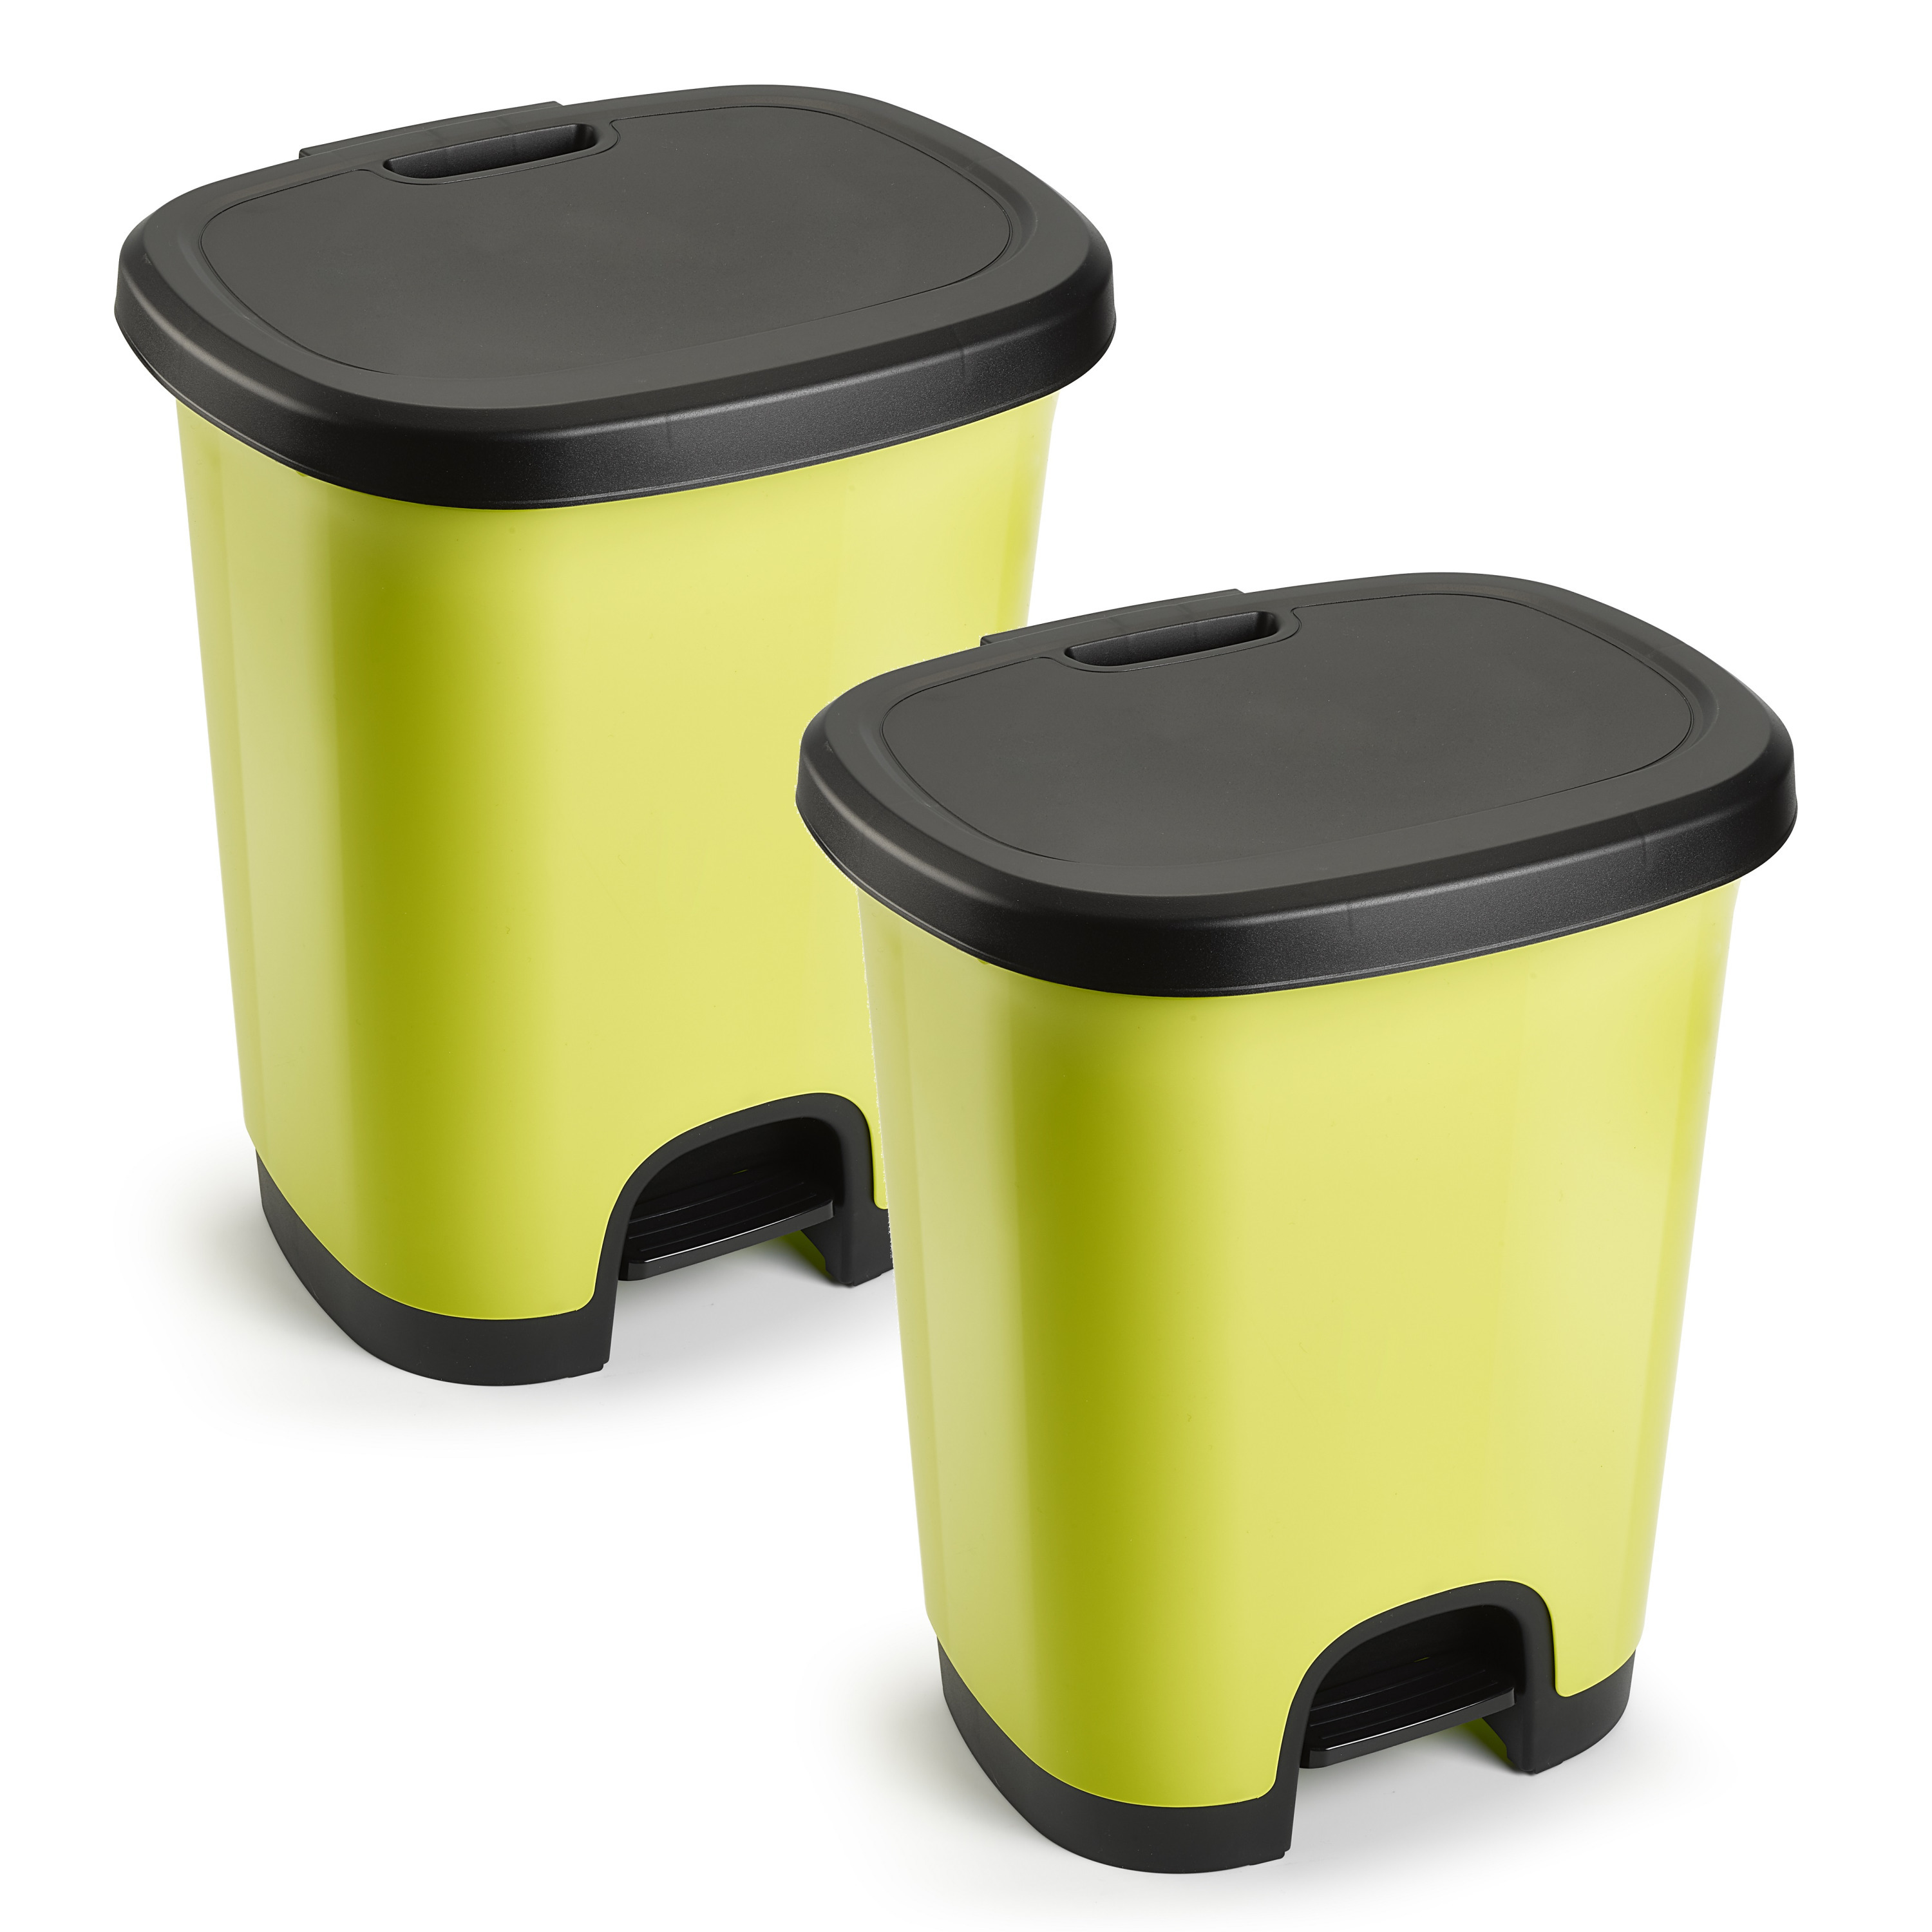 2x Stuks afvalemmer-vuilnisemmer-pedaalemmer 18 liter in het kiwi groen-zwart met deksel en pedaal